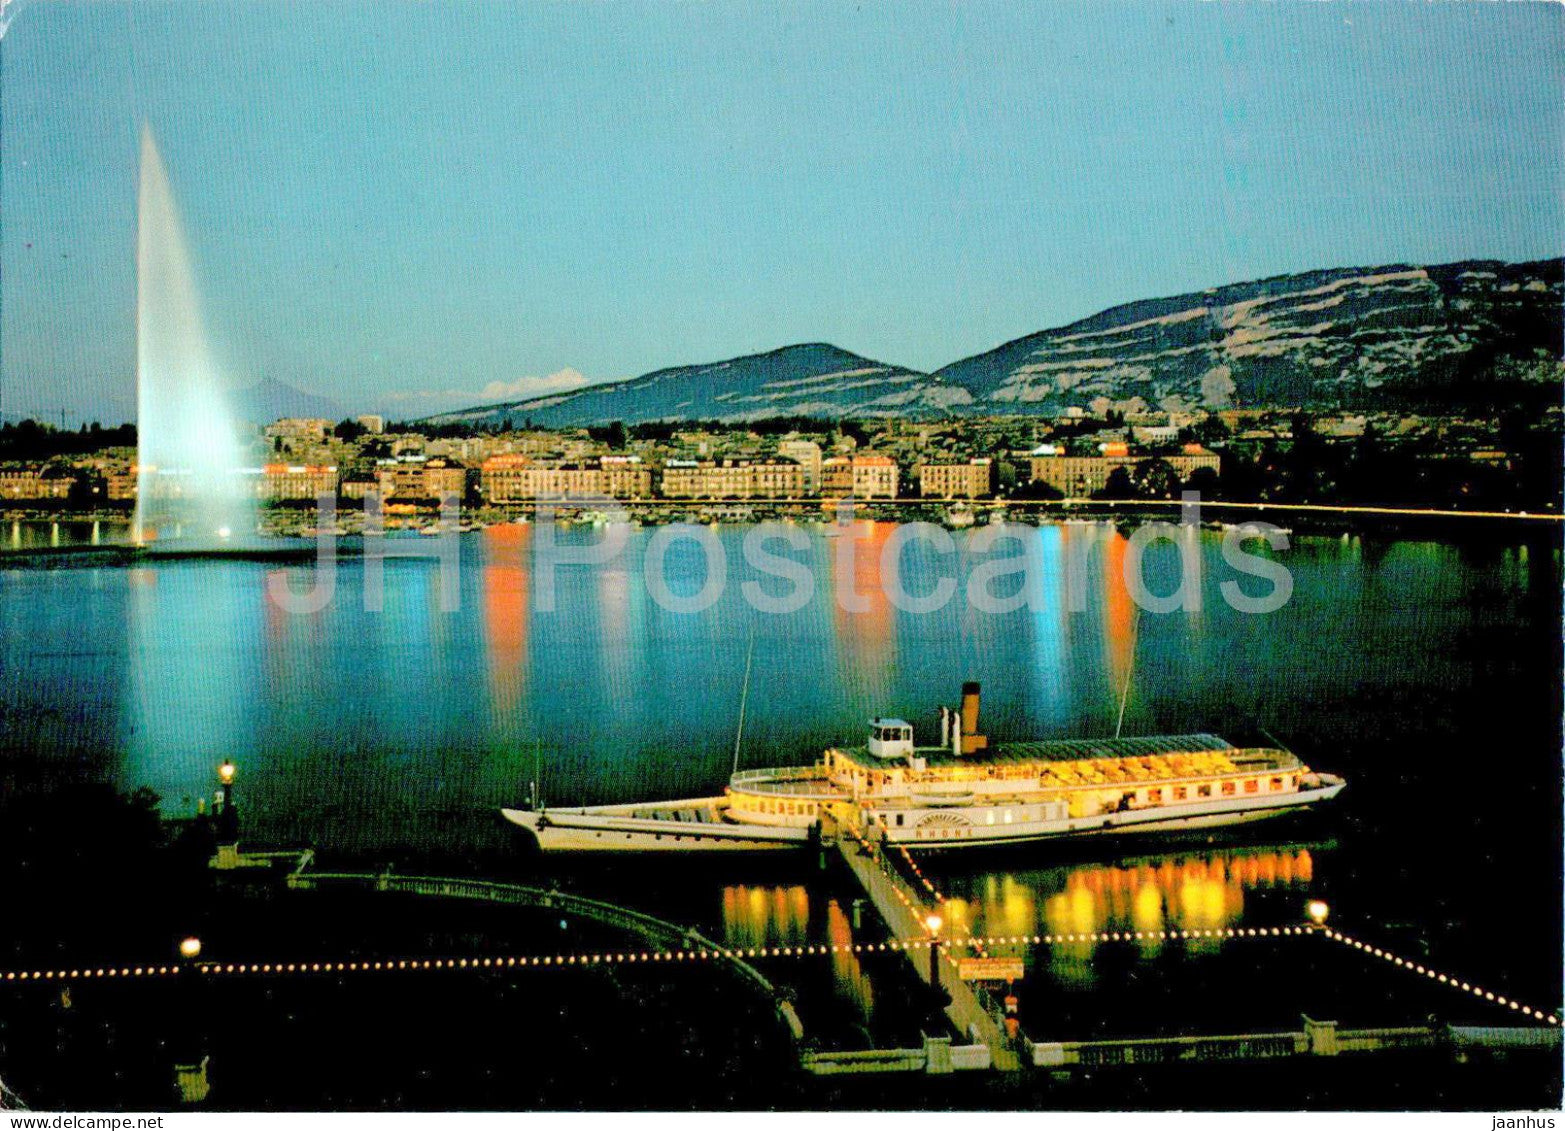 Geneva - Geneve - La Rade et le Jet d'Eau - Geneve la Nuit - 5520 - 1987 - Switzerland - used - JH Postcards